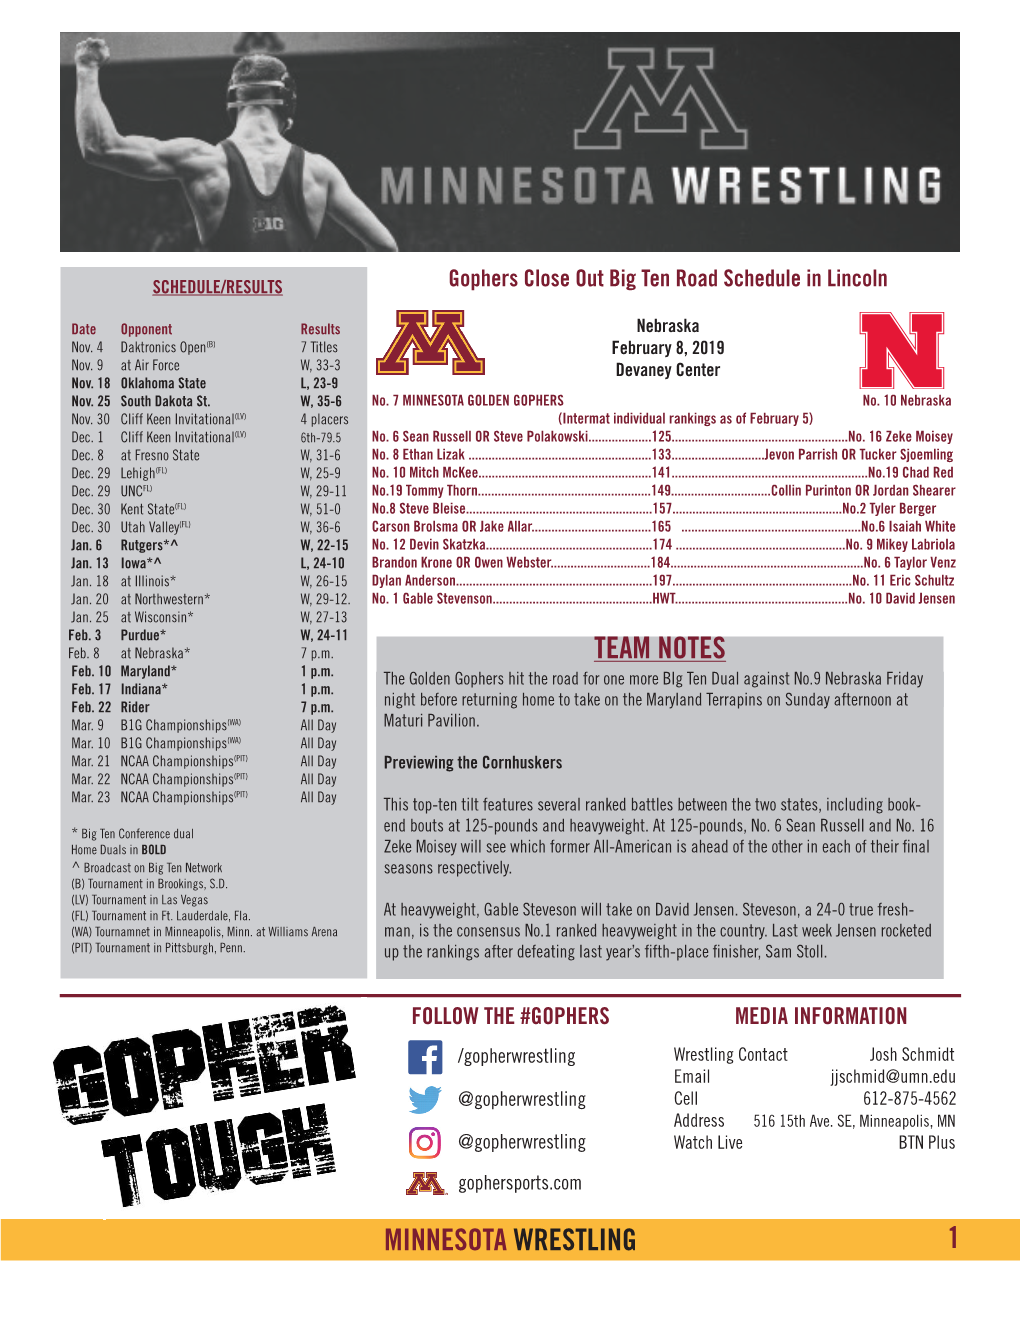 1 Minnesota Wrestling Team Notes